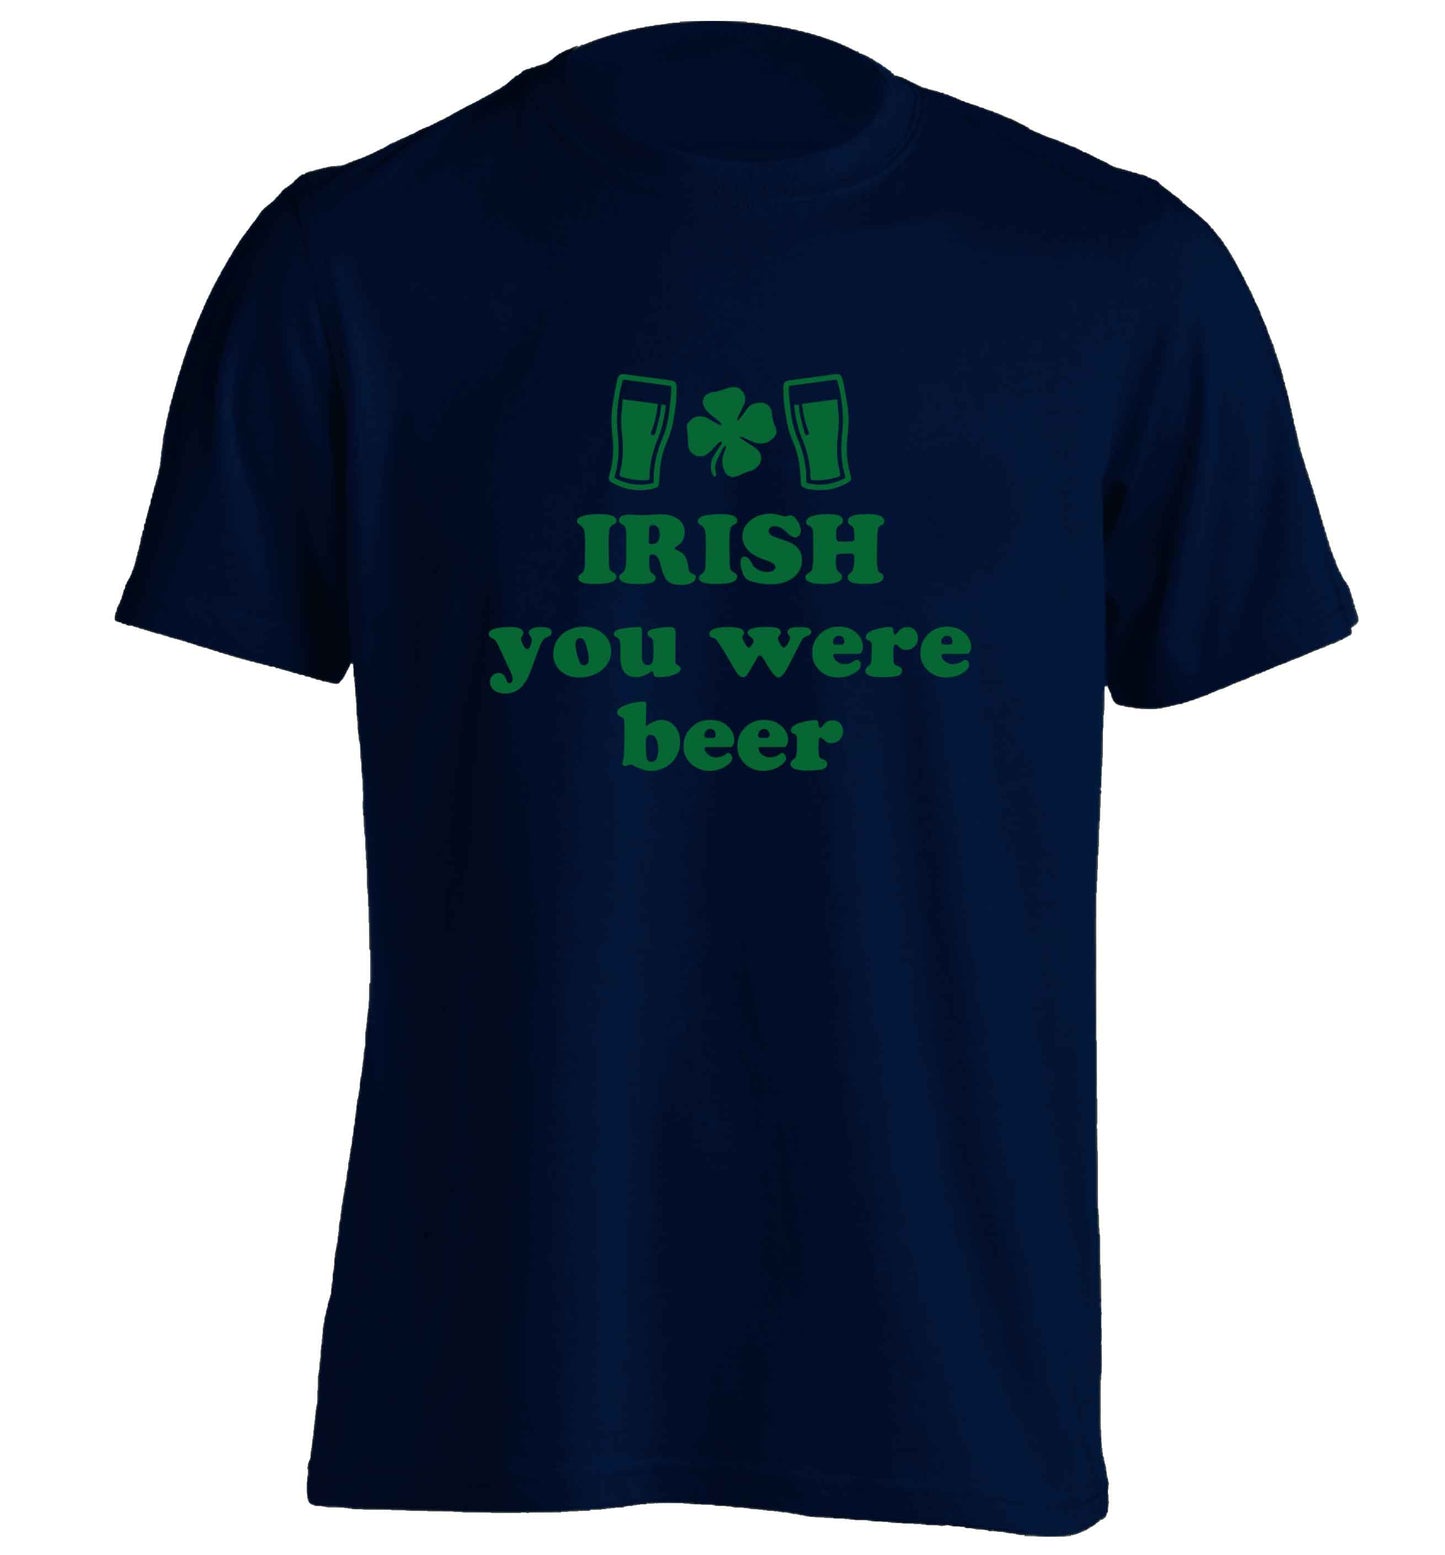 Irish you were beer adults unisex navy Tshirt 2XL